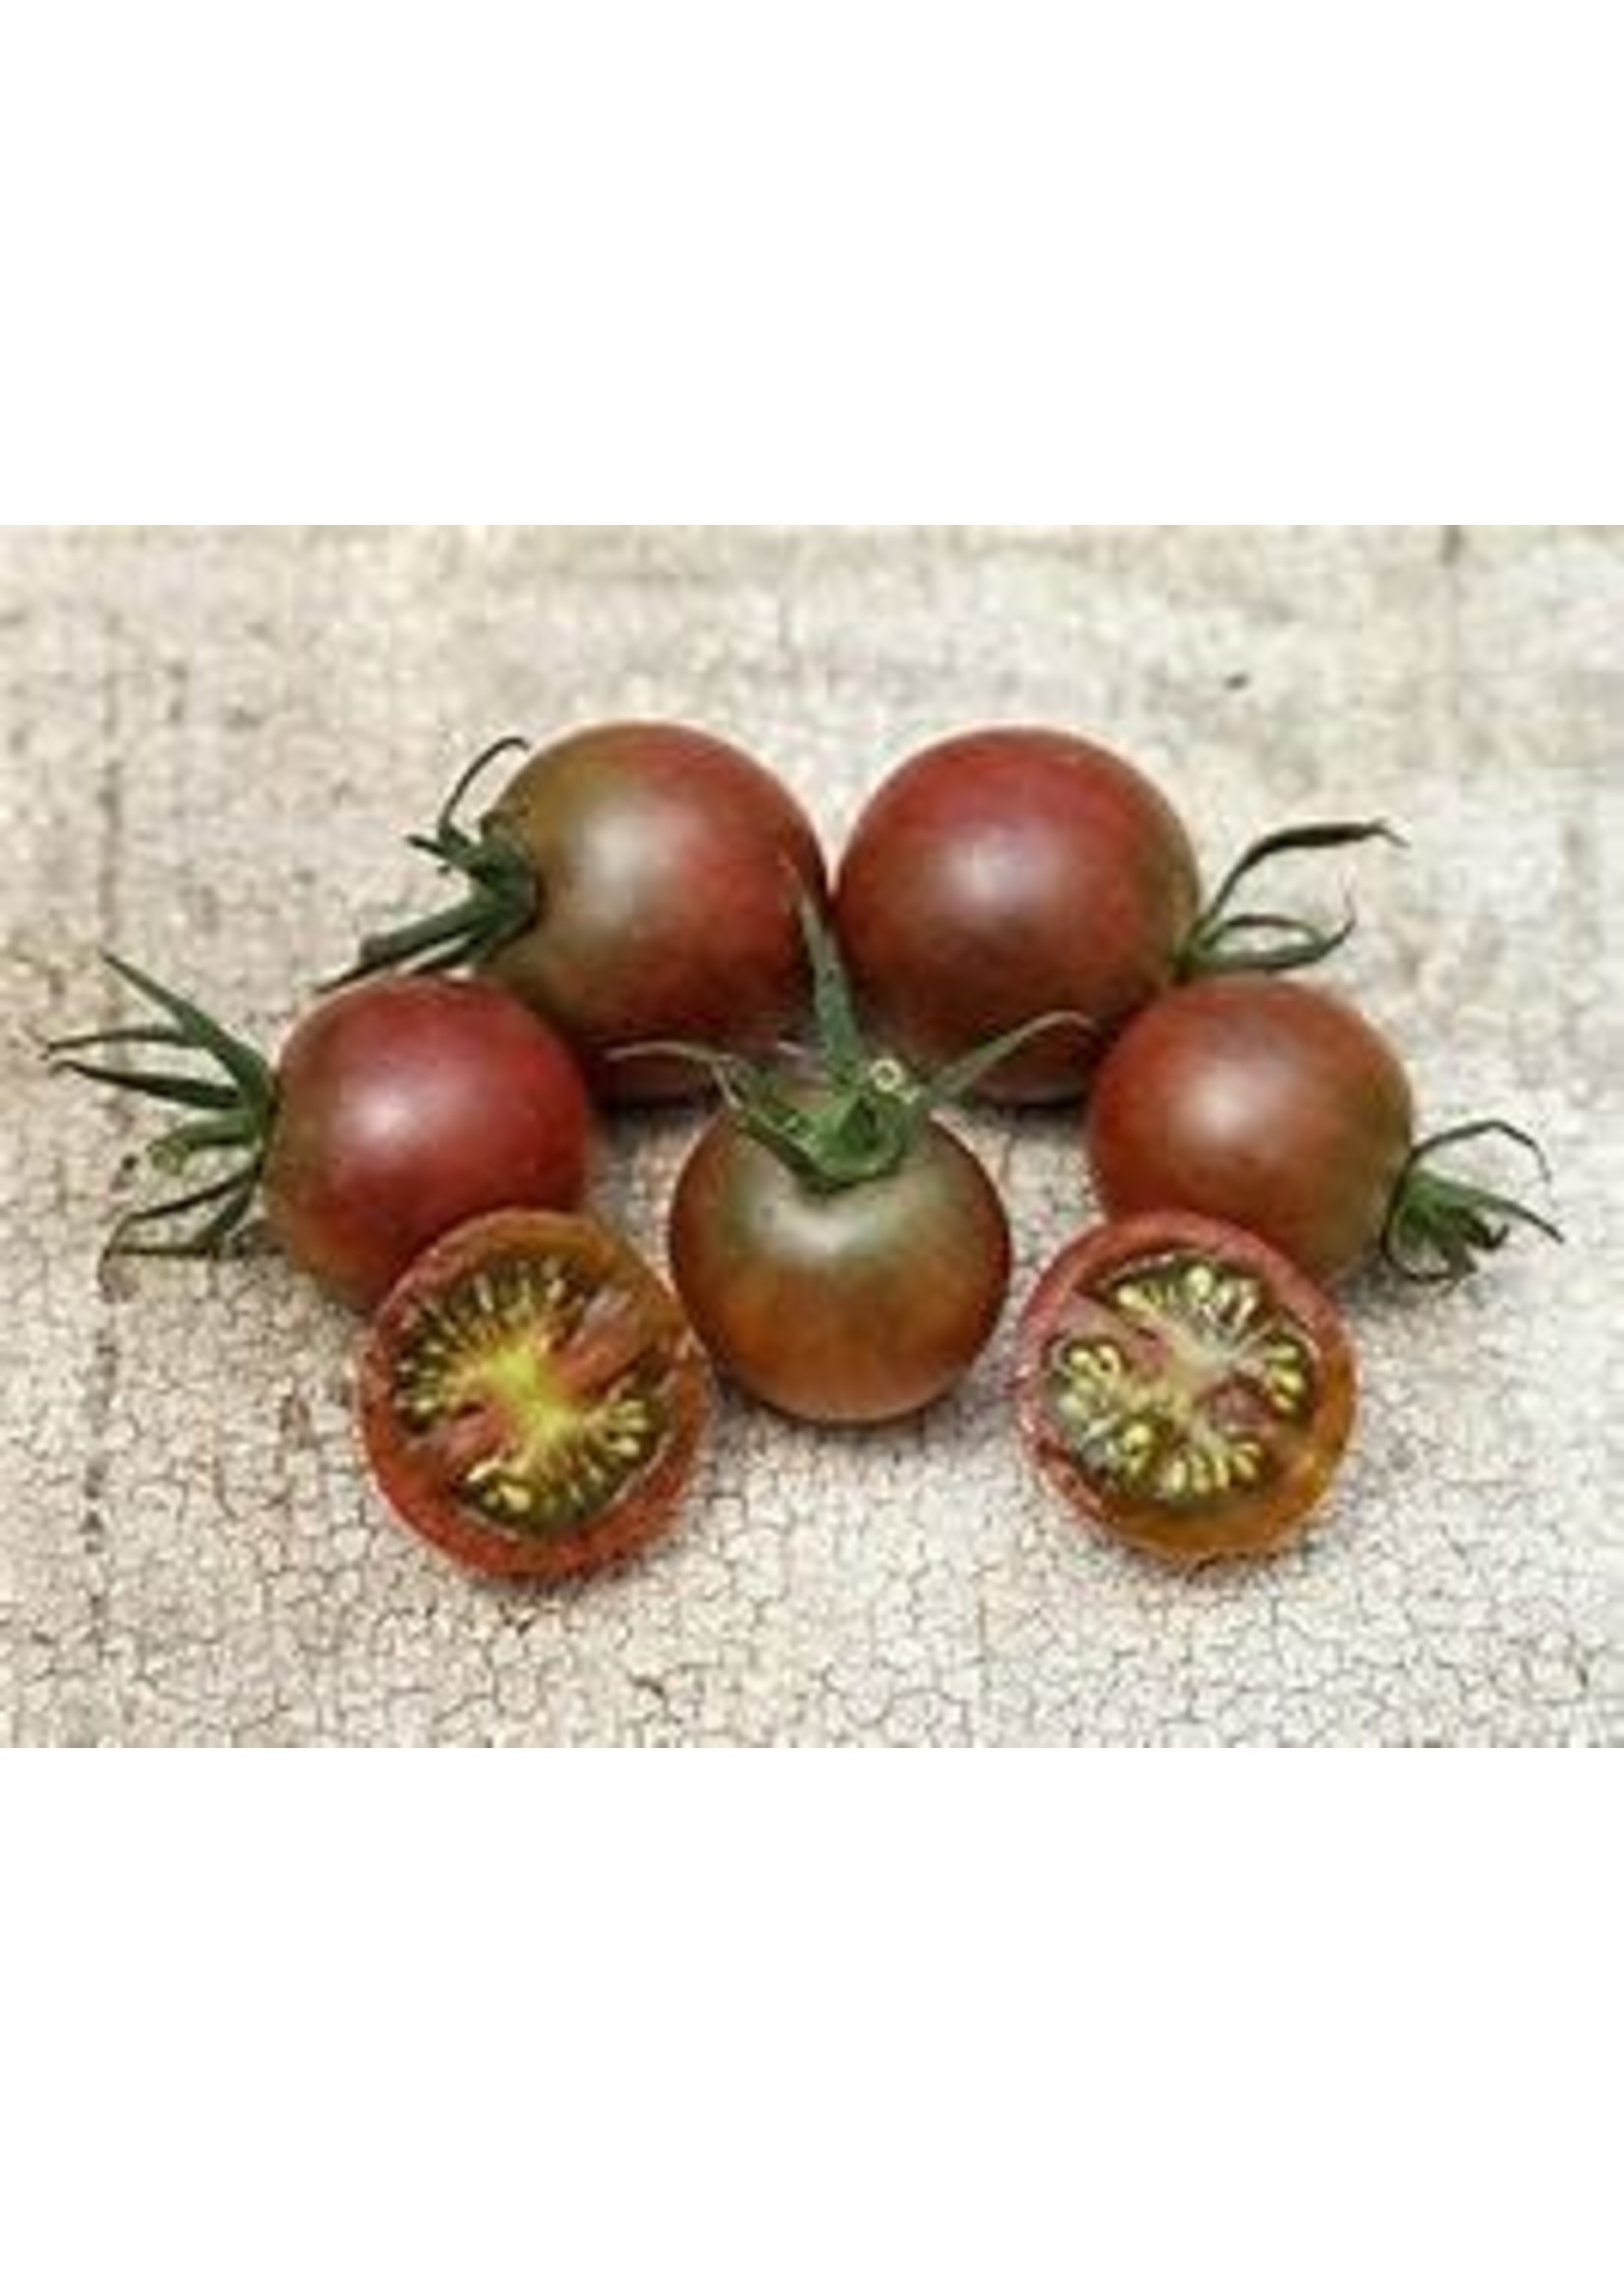 Heirloom Seeds(BIRRI) Tomatoes – Cherry black